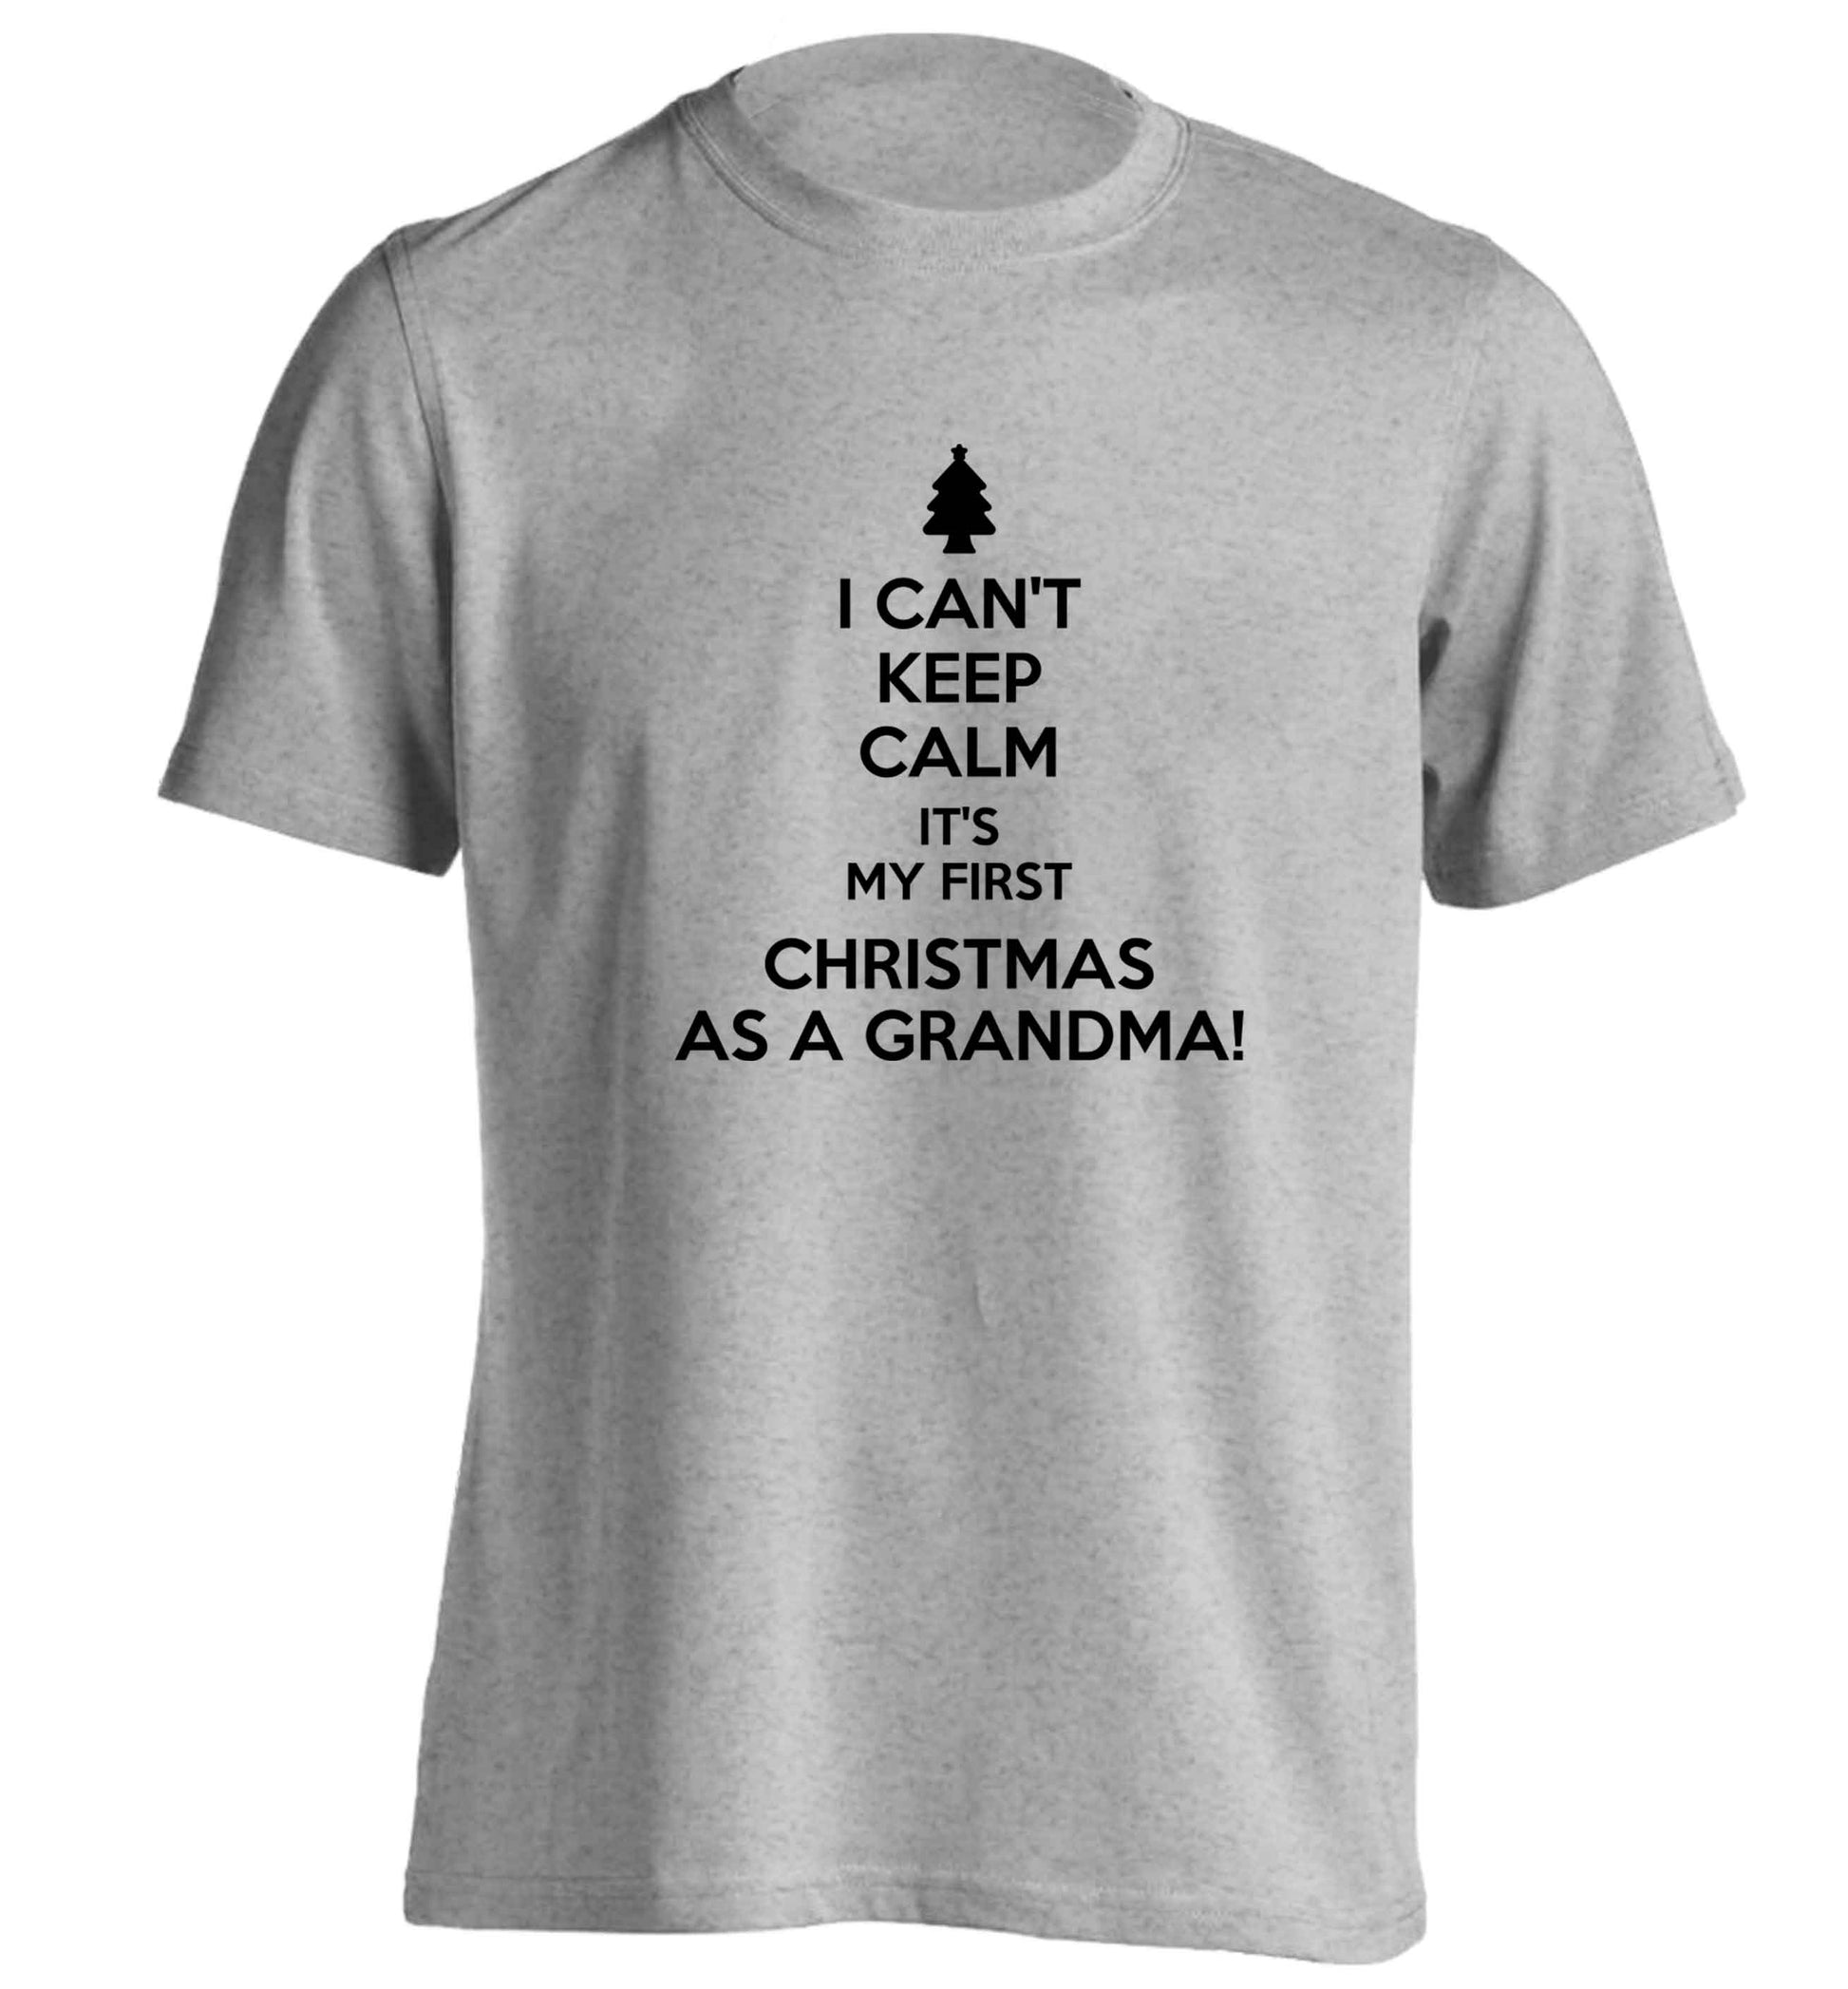 I can't keep calm it's my first Christmas as a grandma! adults unisex grey Tshirt 2XL